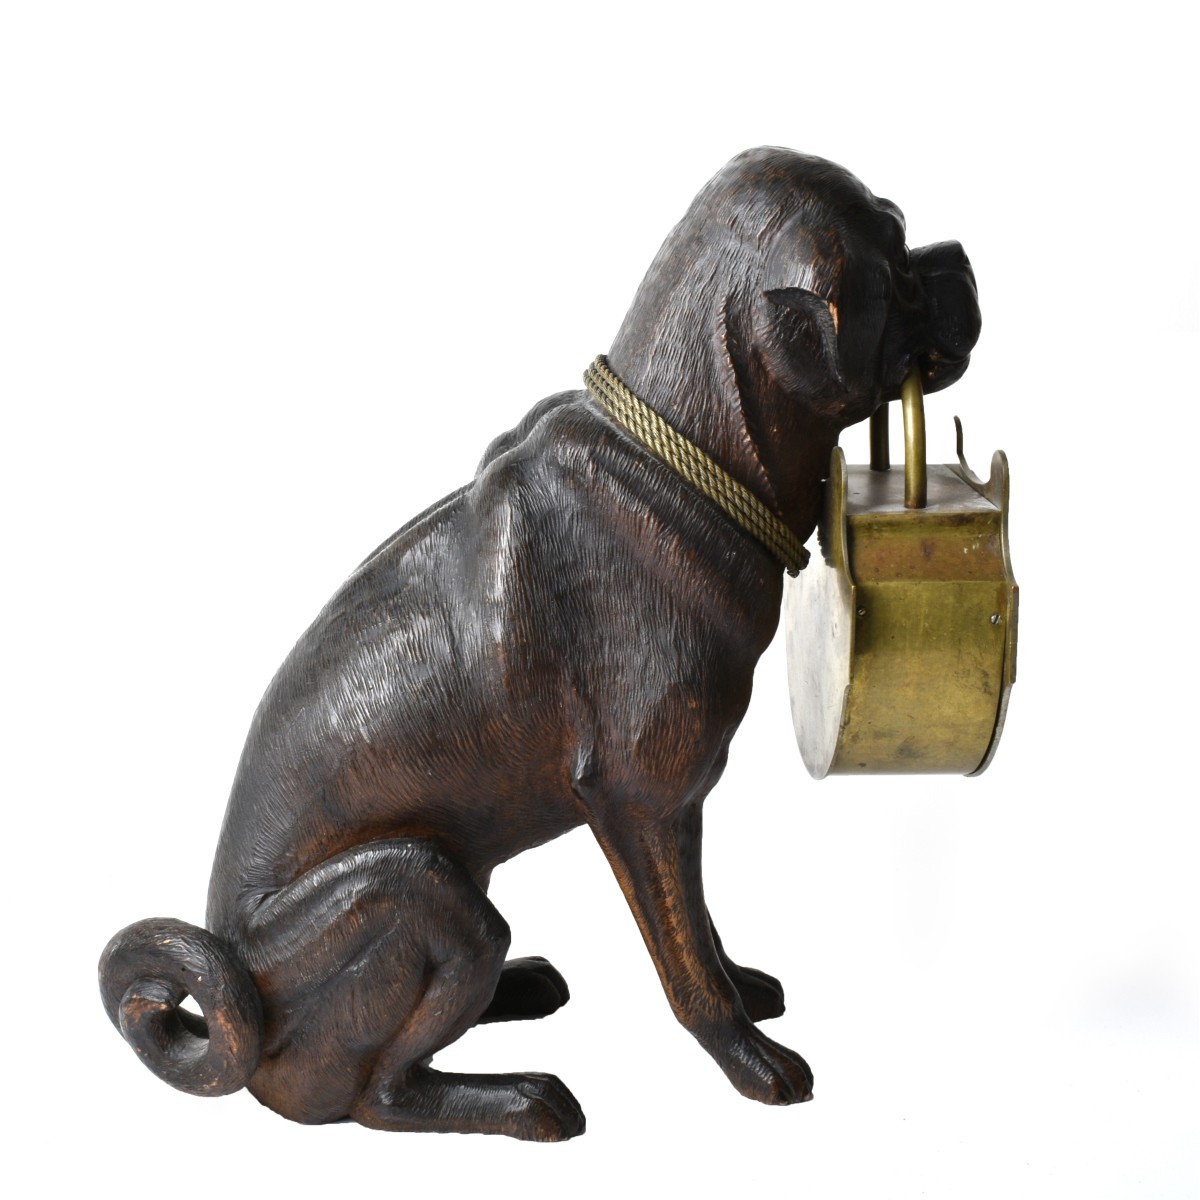 Antique Black Forest Bulldog w/ Clock